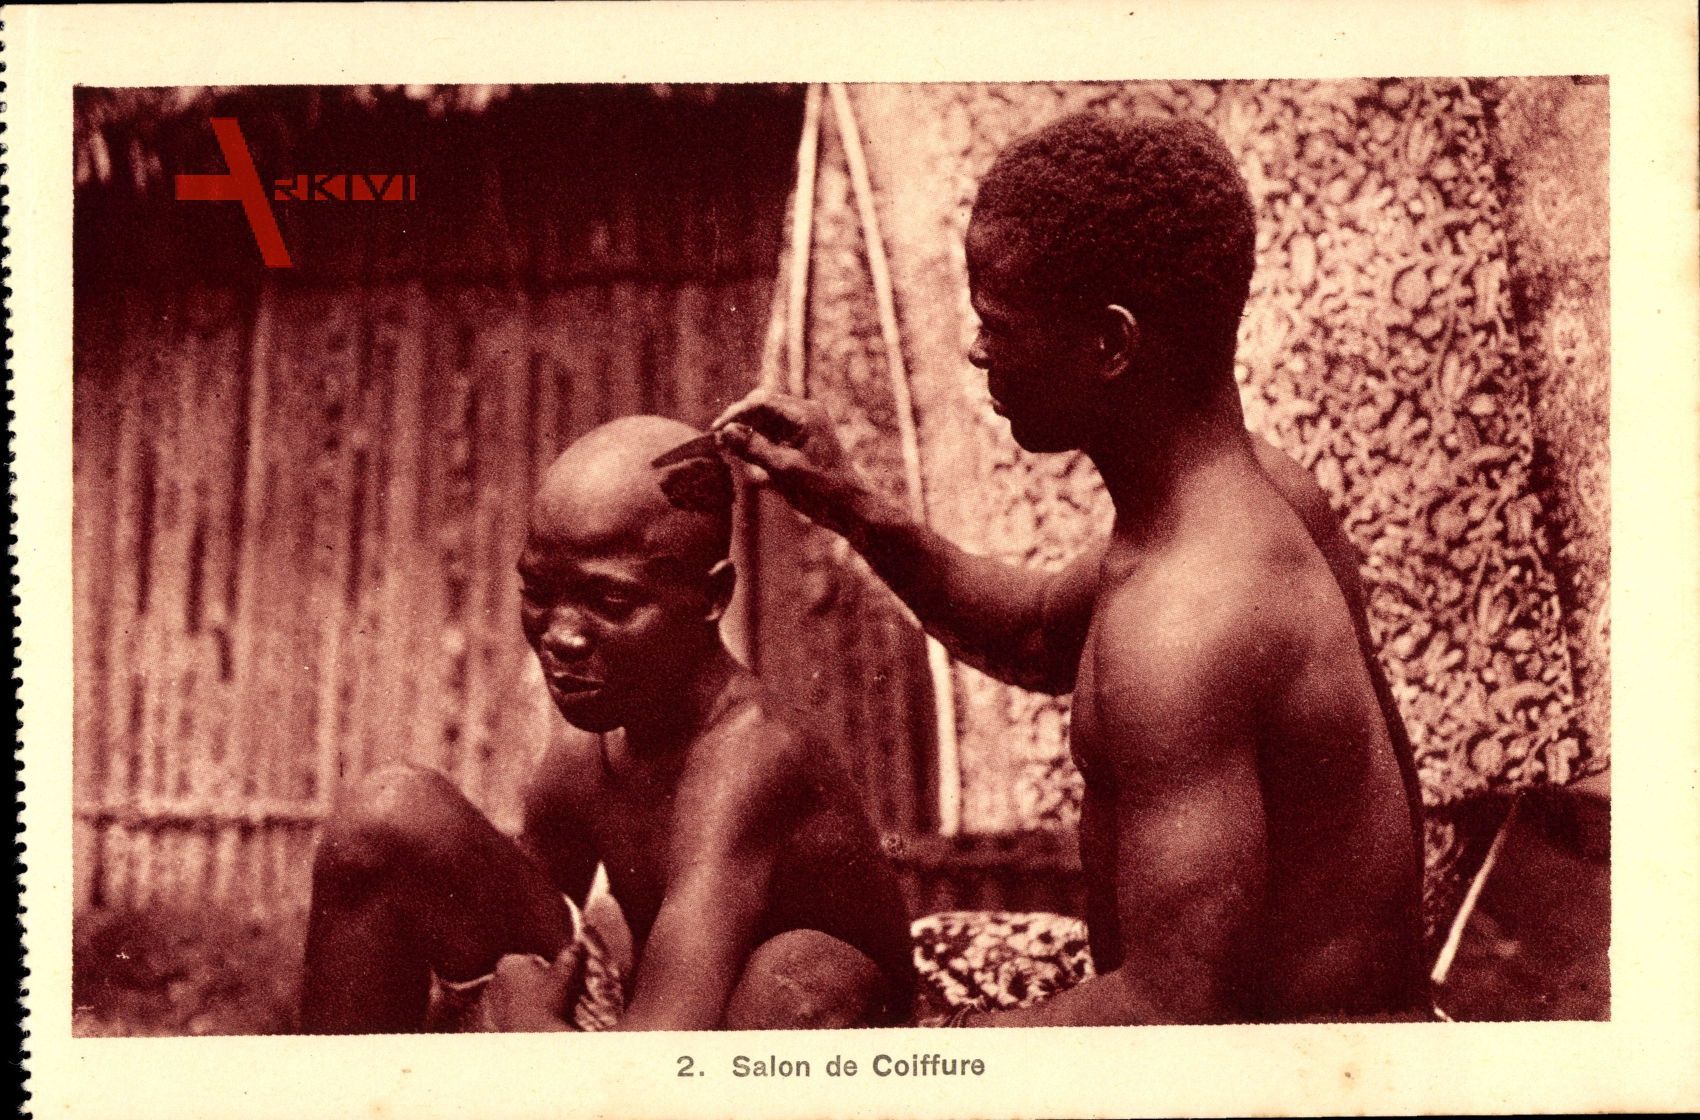 Salon de Coiffure, zwei Männer beim Frisieren